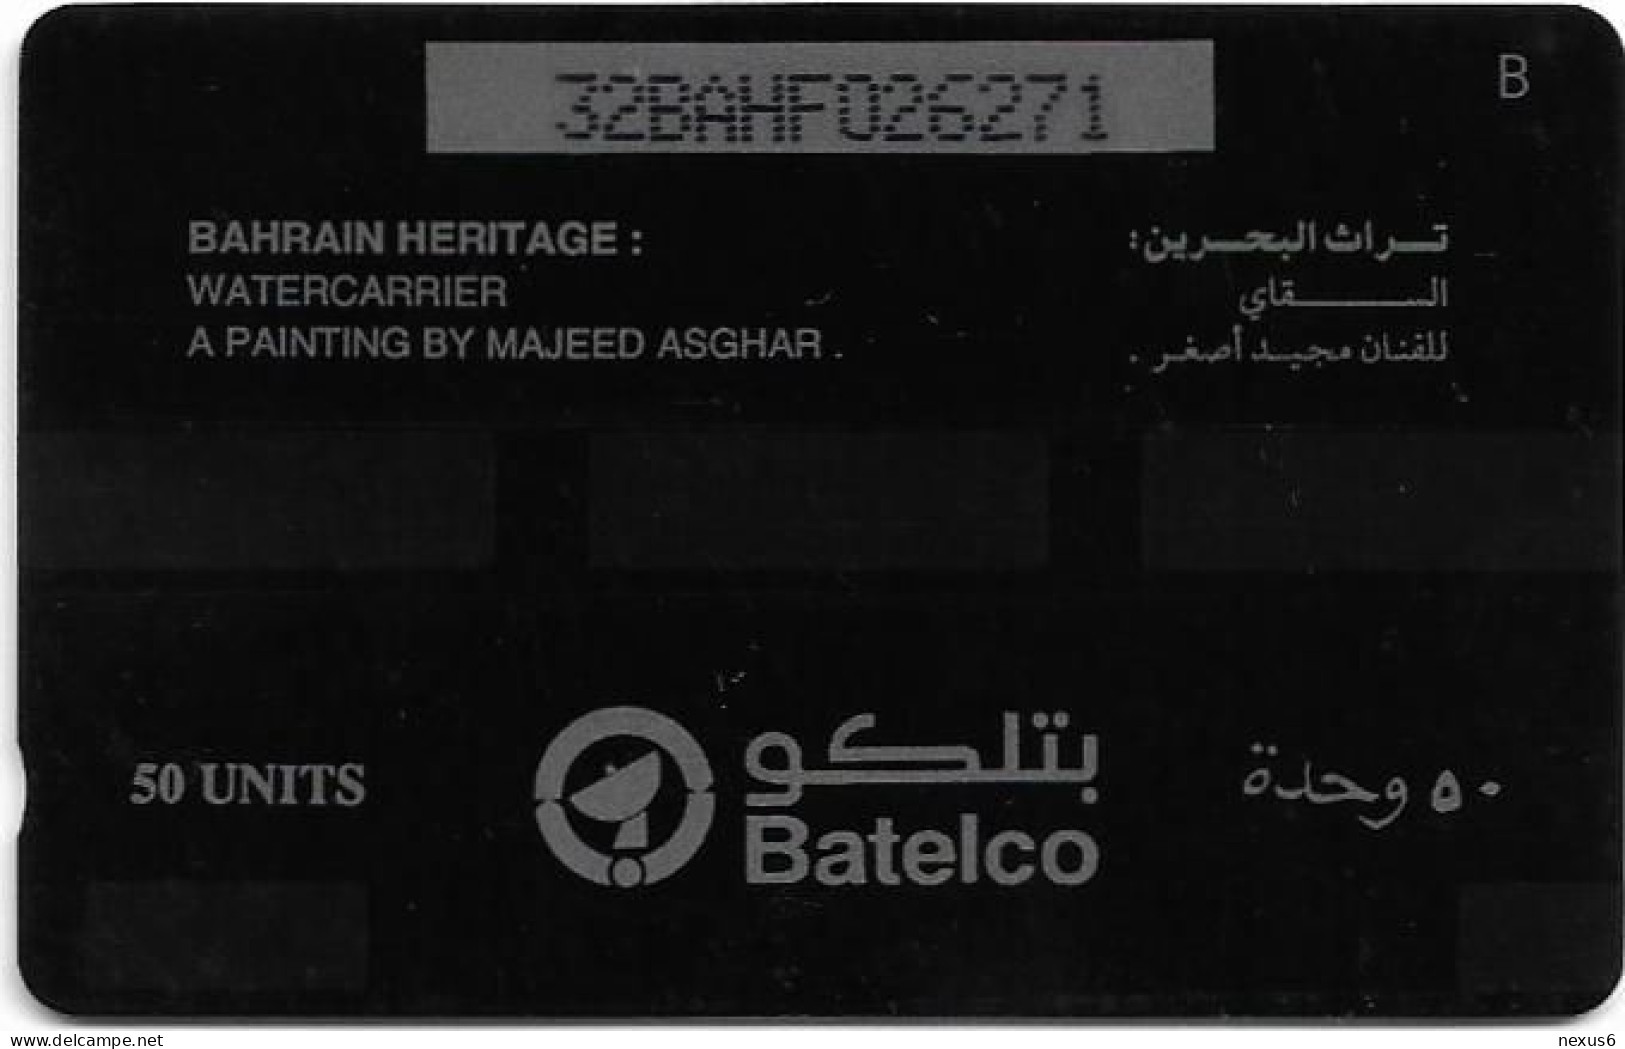 Bahrain - Batelco (GPT) - Heritage - Water Carrier - 32BAHF (Normal 0, Letter ''B''), 1994, 50Units, Used - Bahrain